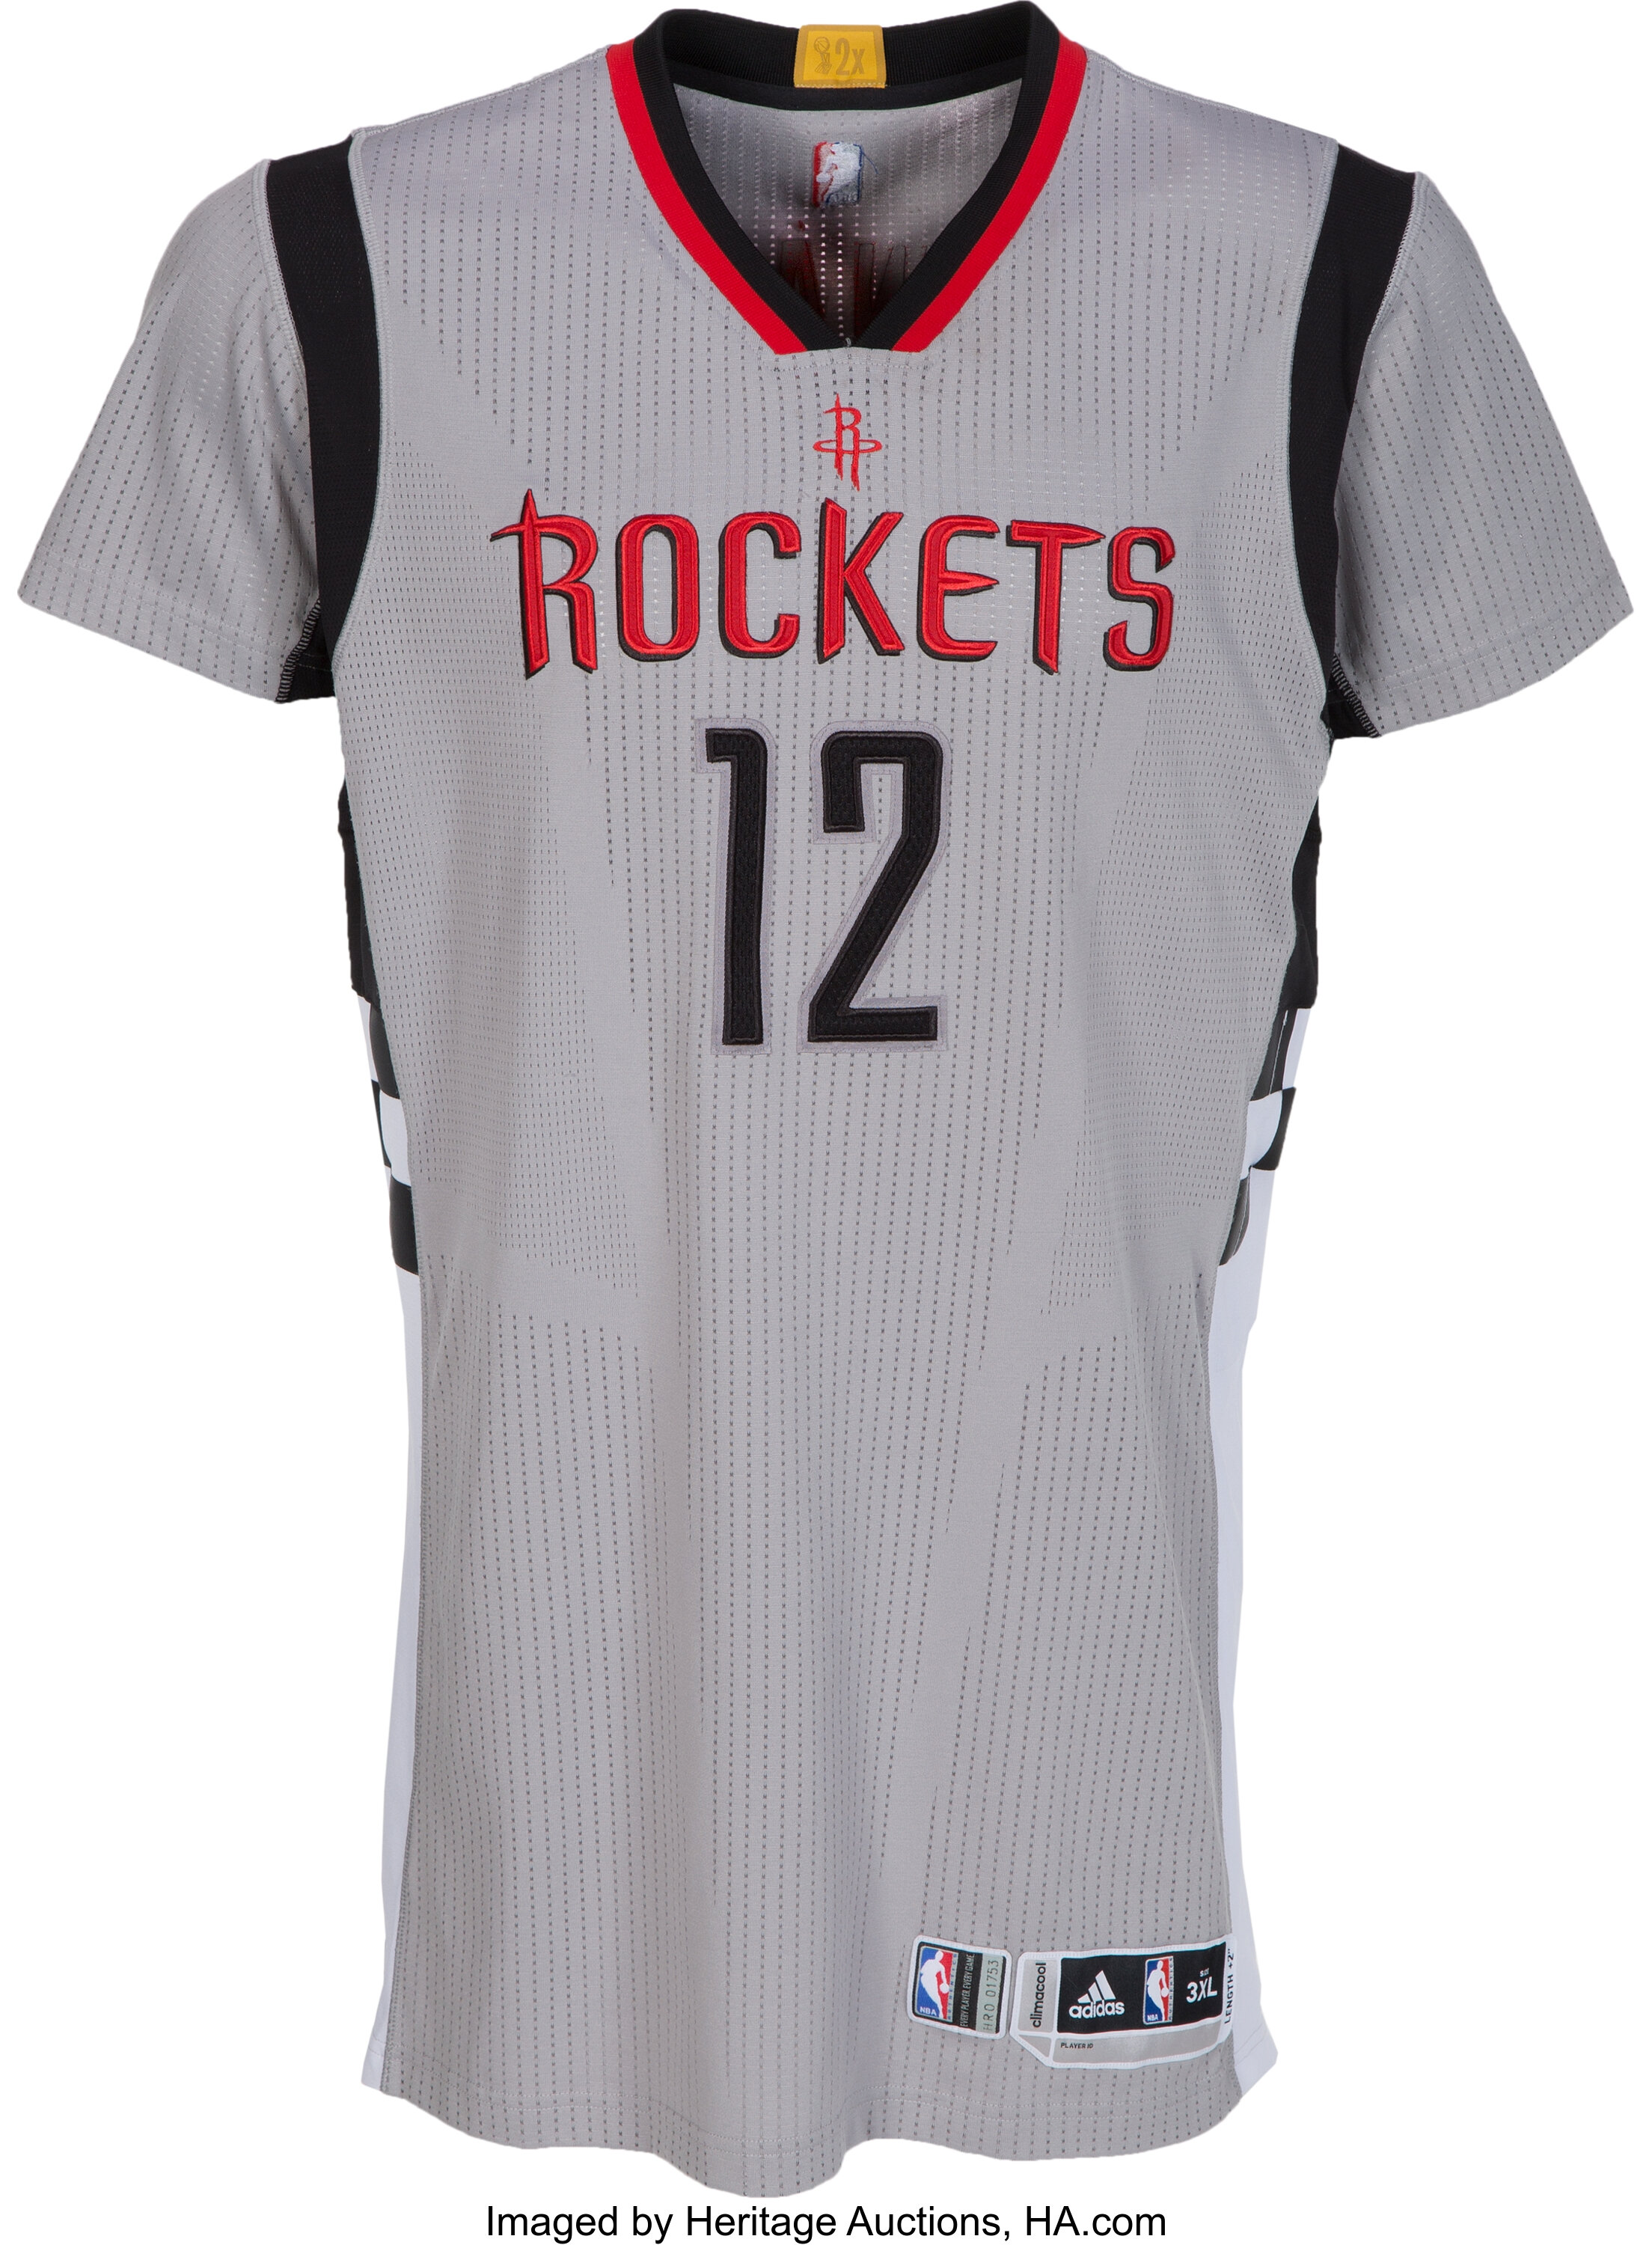 2015-16 Dwight Howard Game Worn, Unwashed Houston Rockets